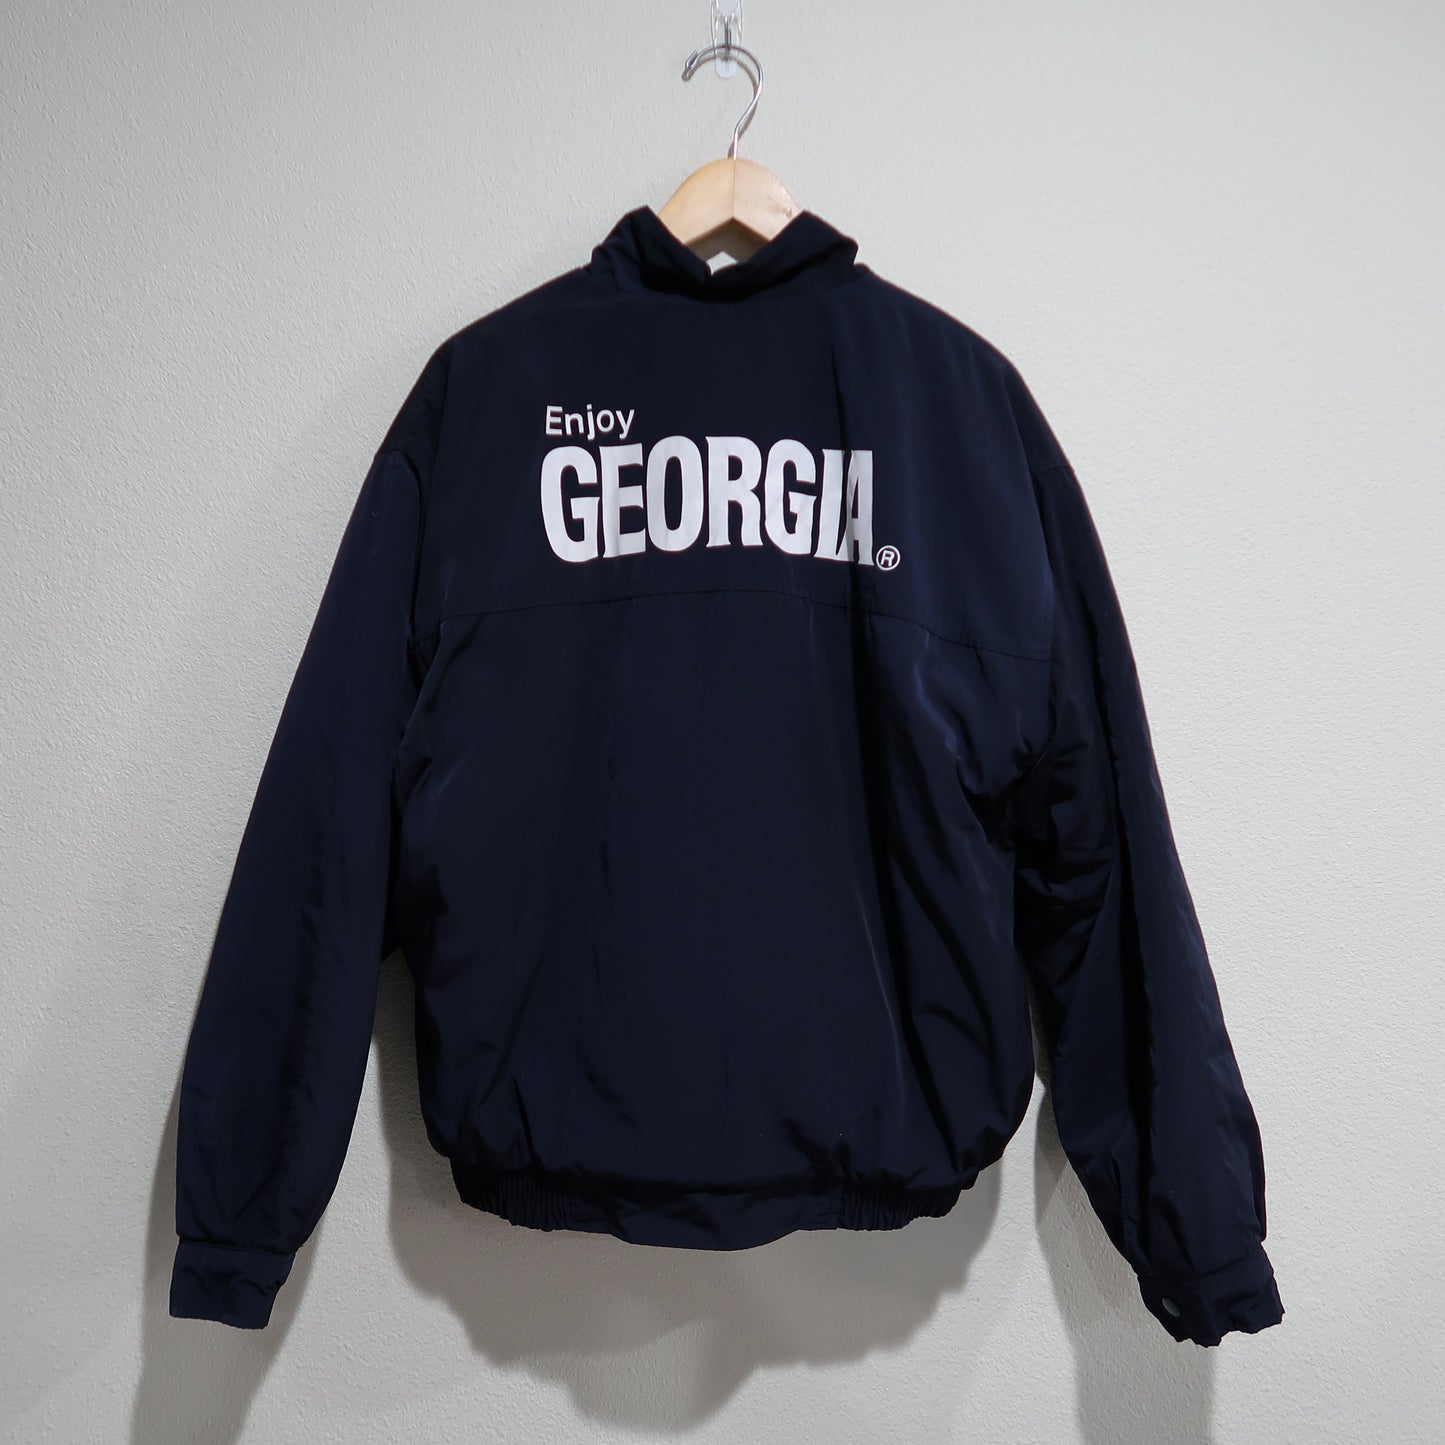 Enjoy Georgia Jacket